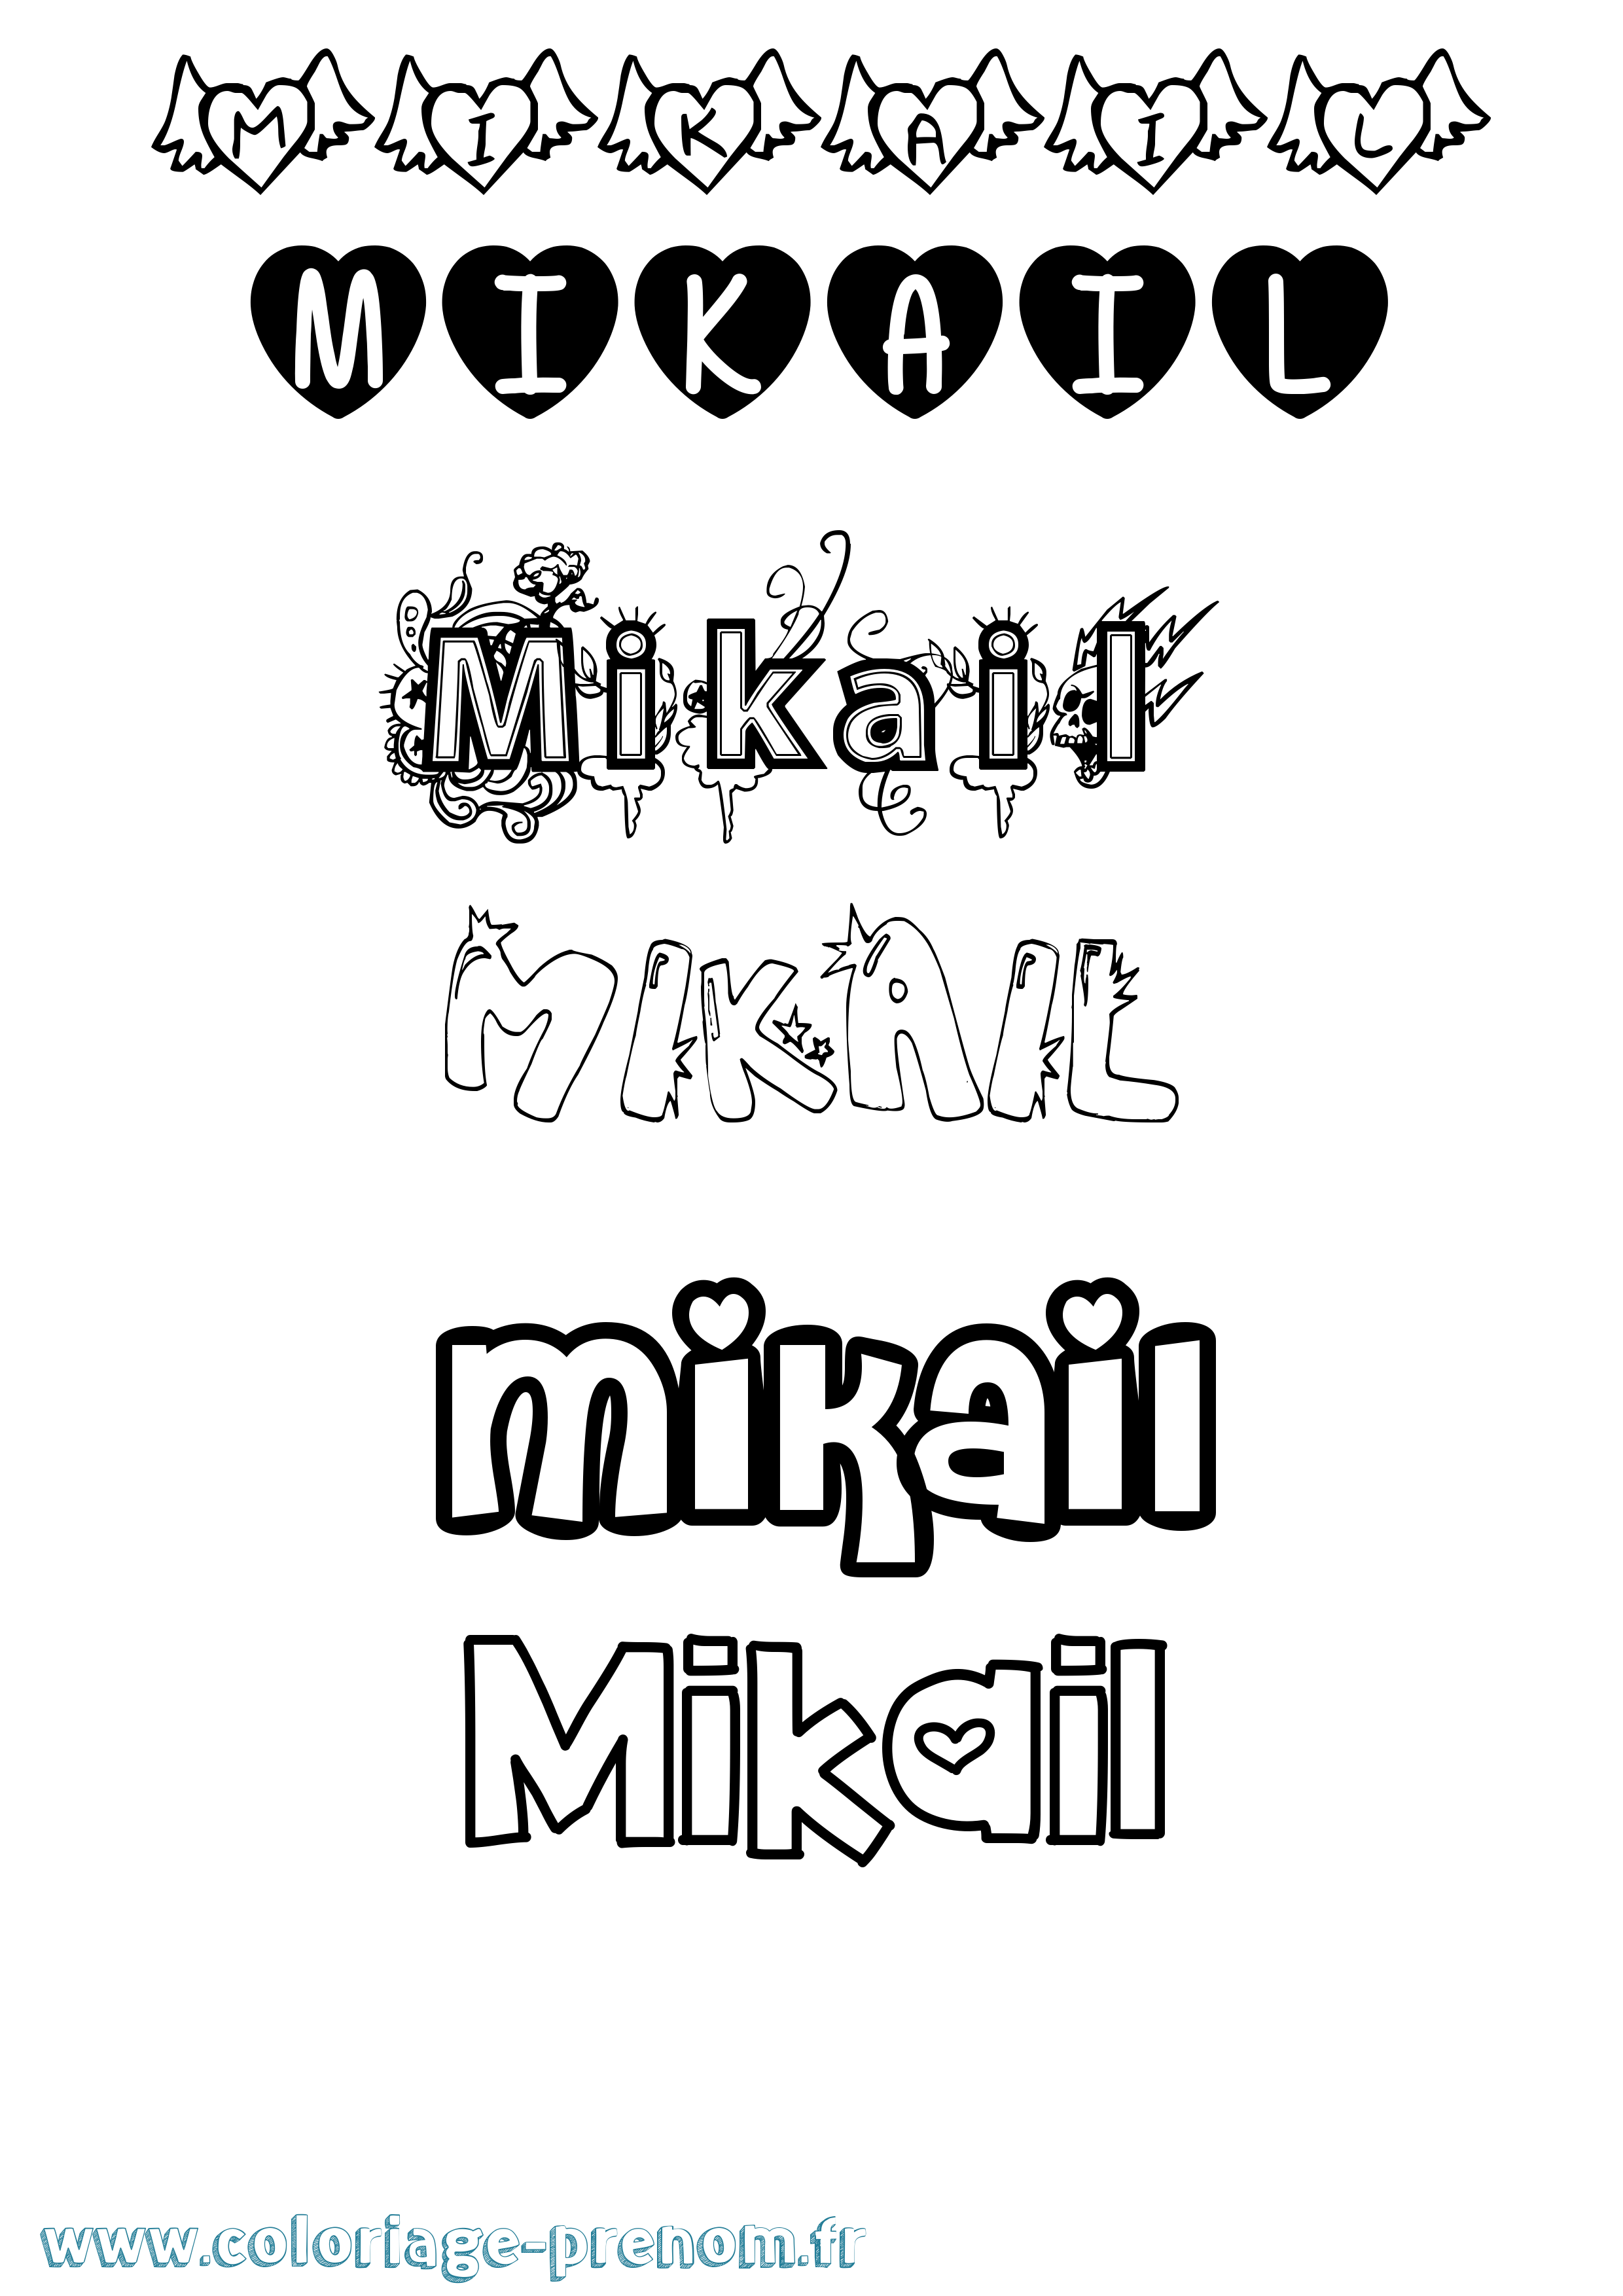 Coloriage prénom Mikail